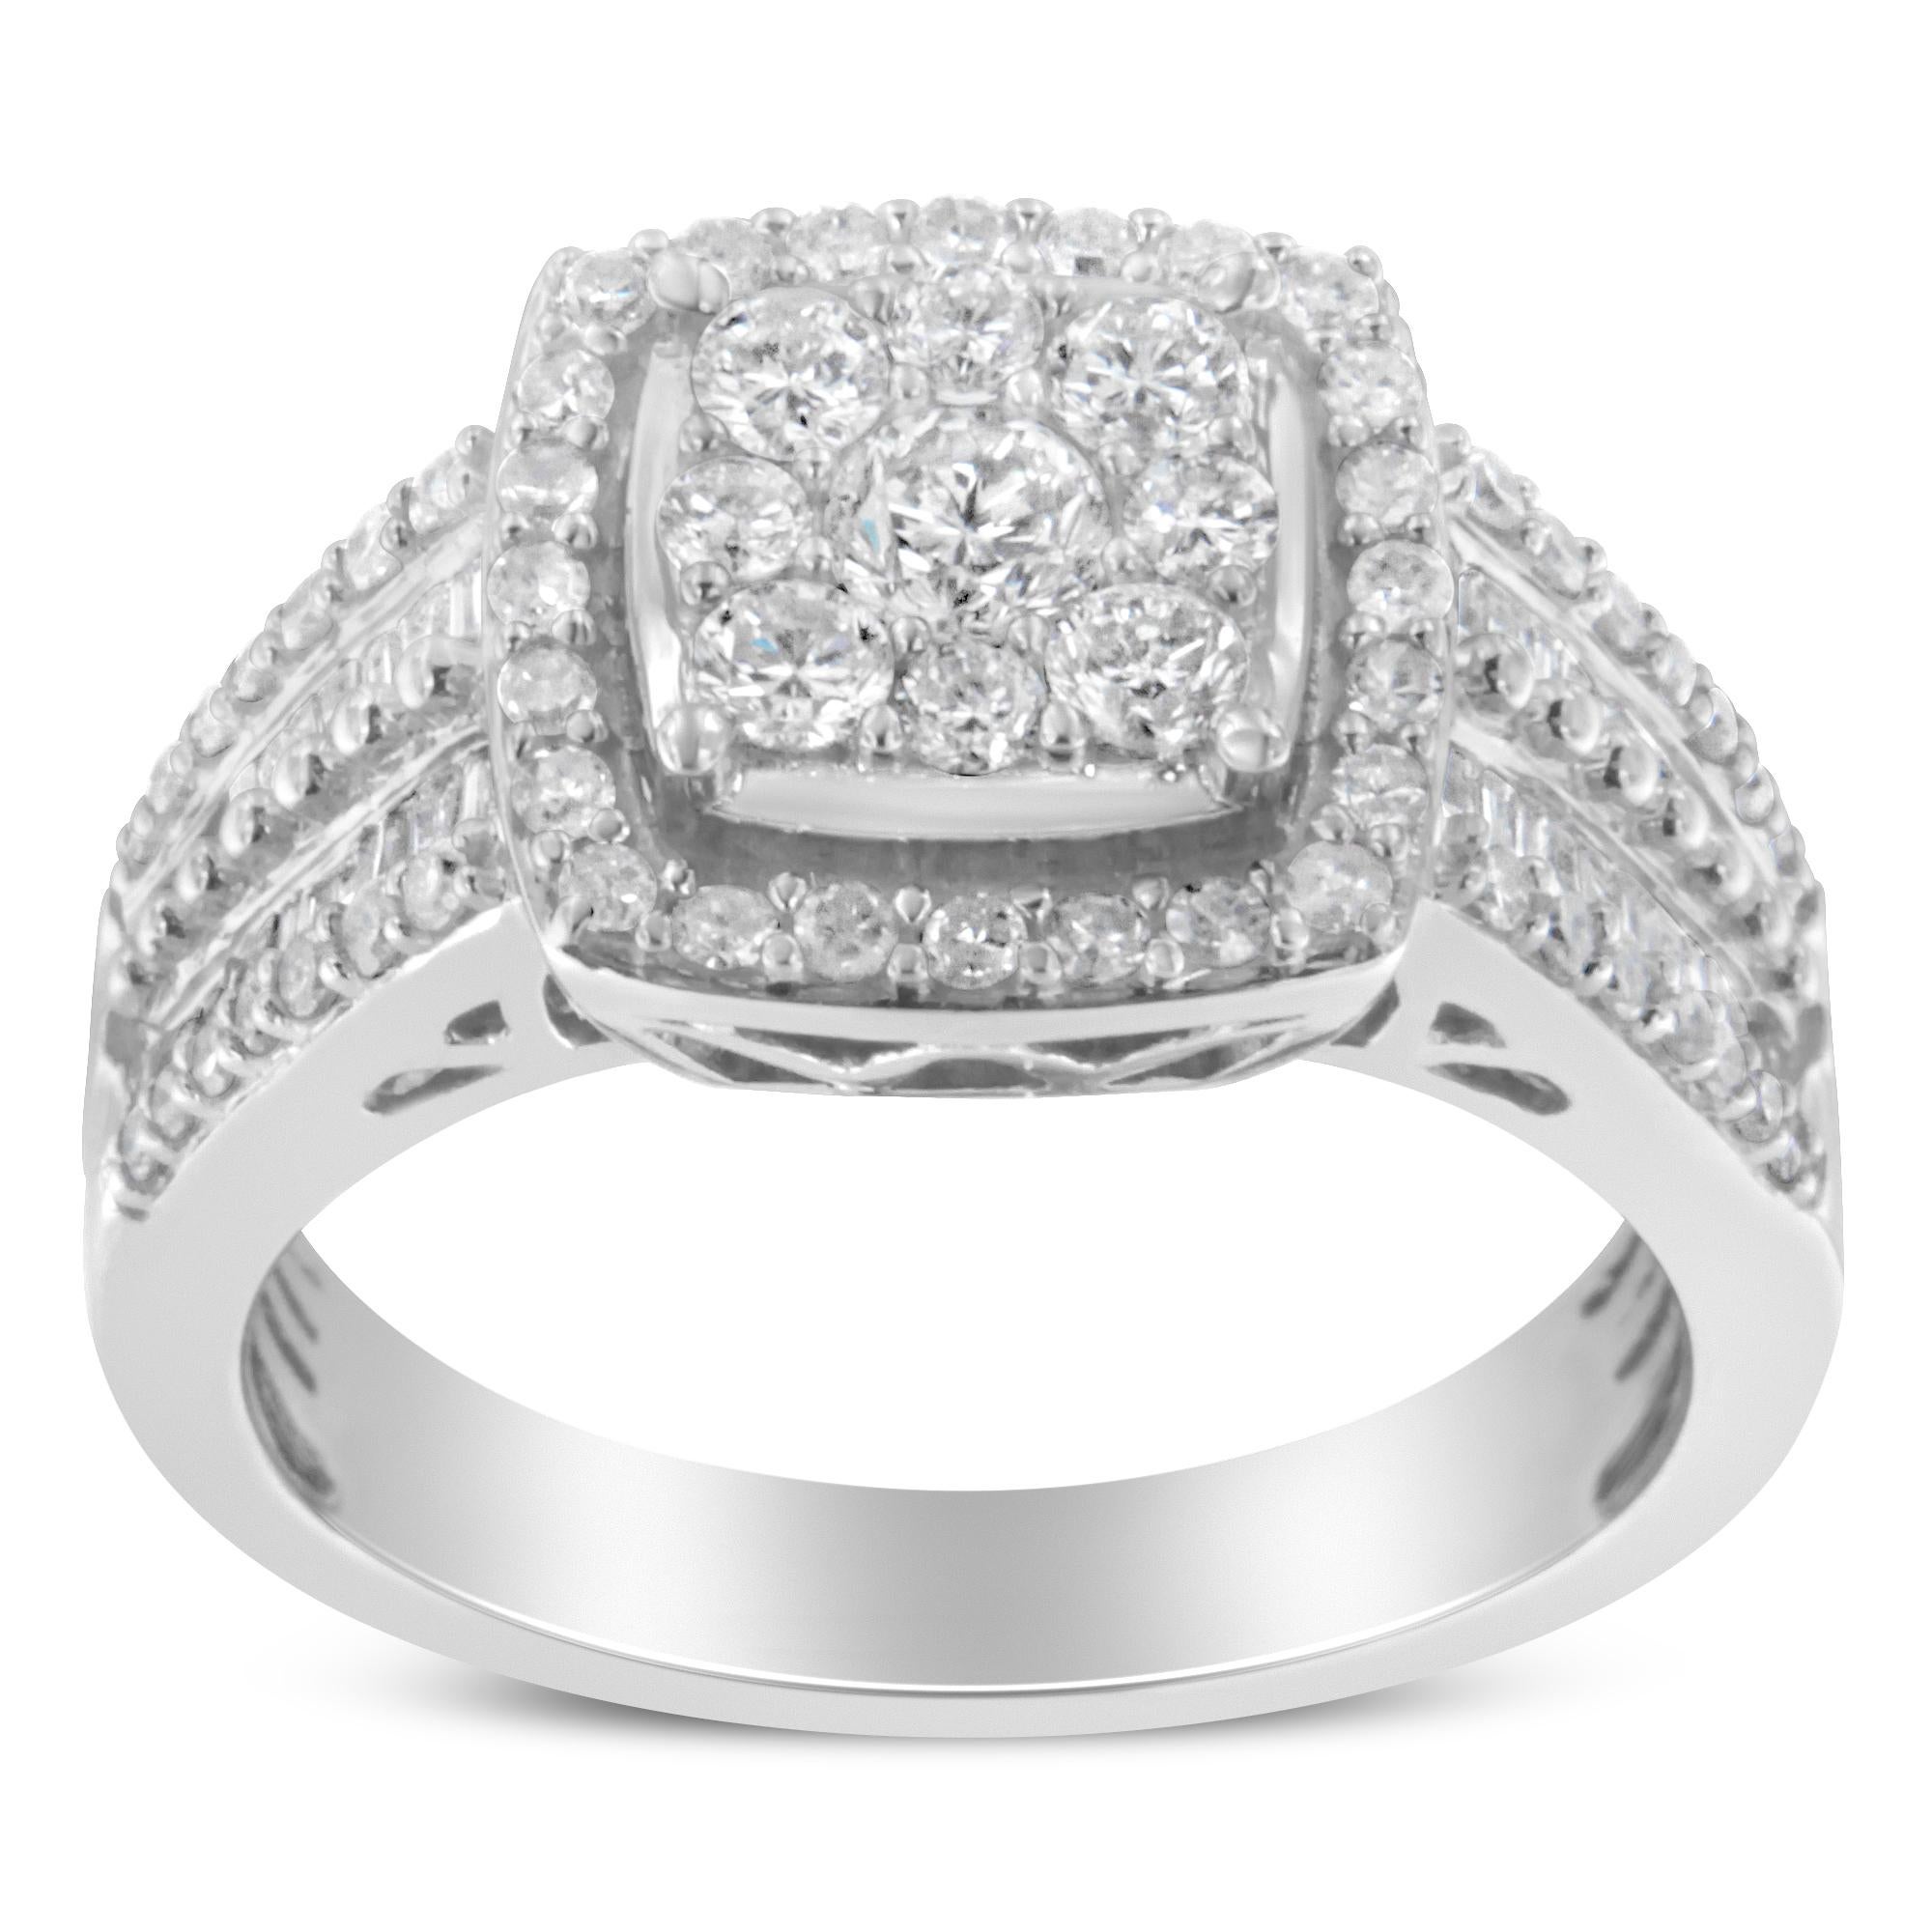 For Sale:  10K White Gold 1.00 Carat Diamond Cluster Ring 2